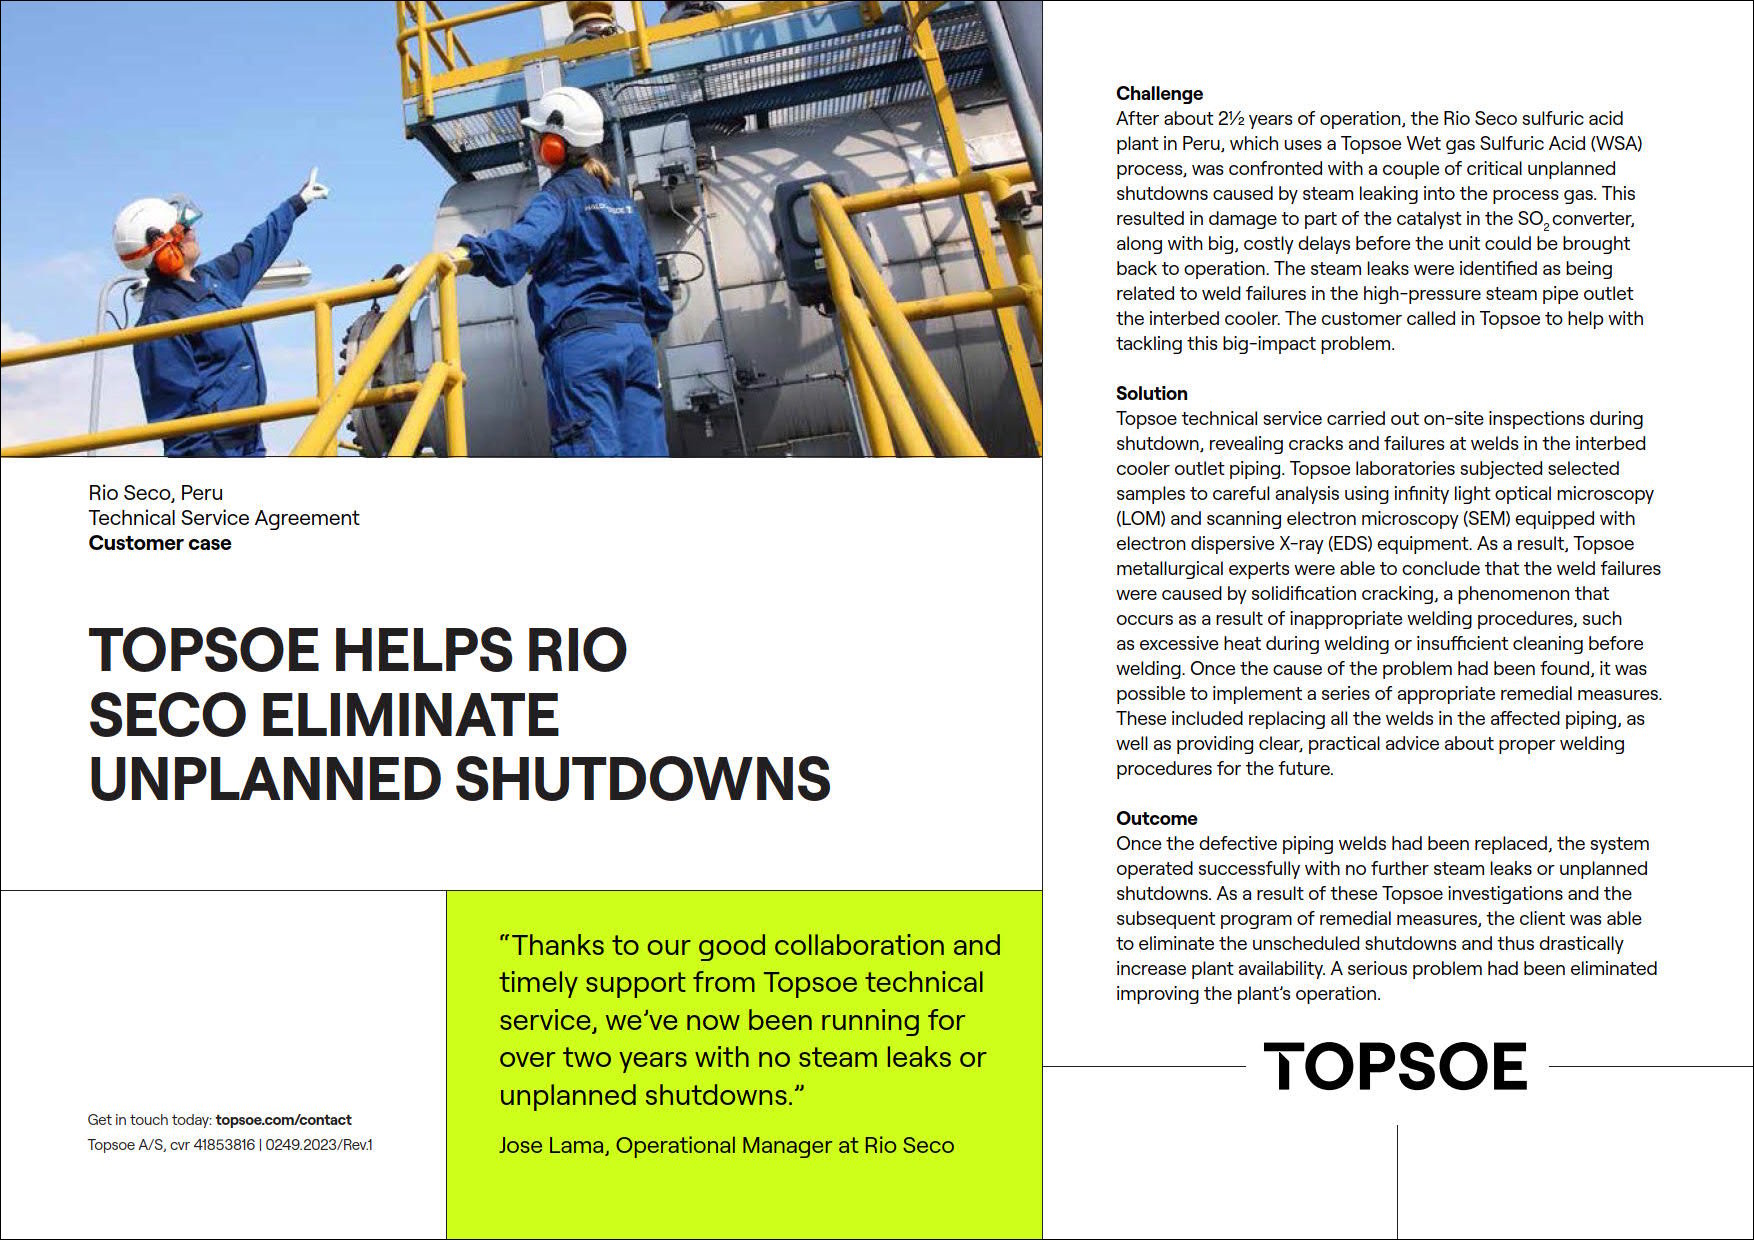 Topsoe helps Rio Seco eliminate unplanned shutdowns